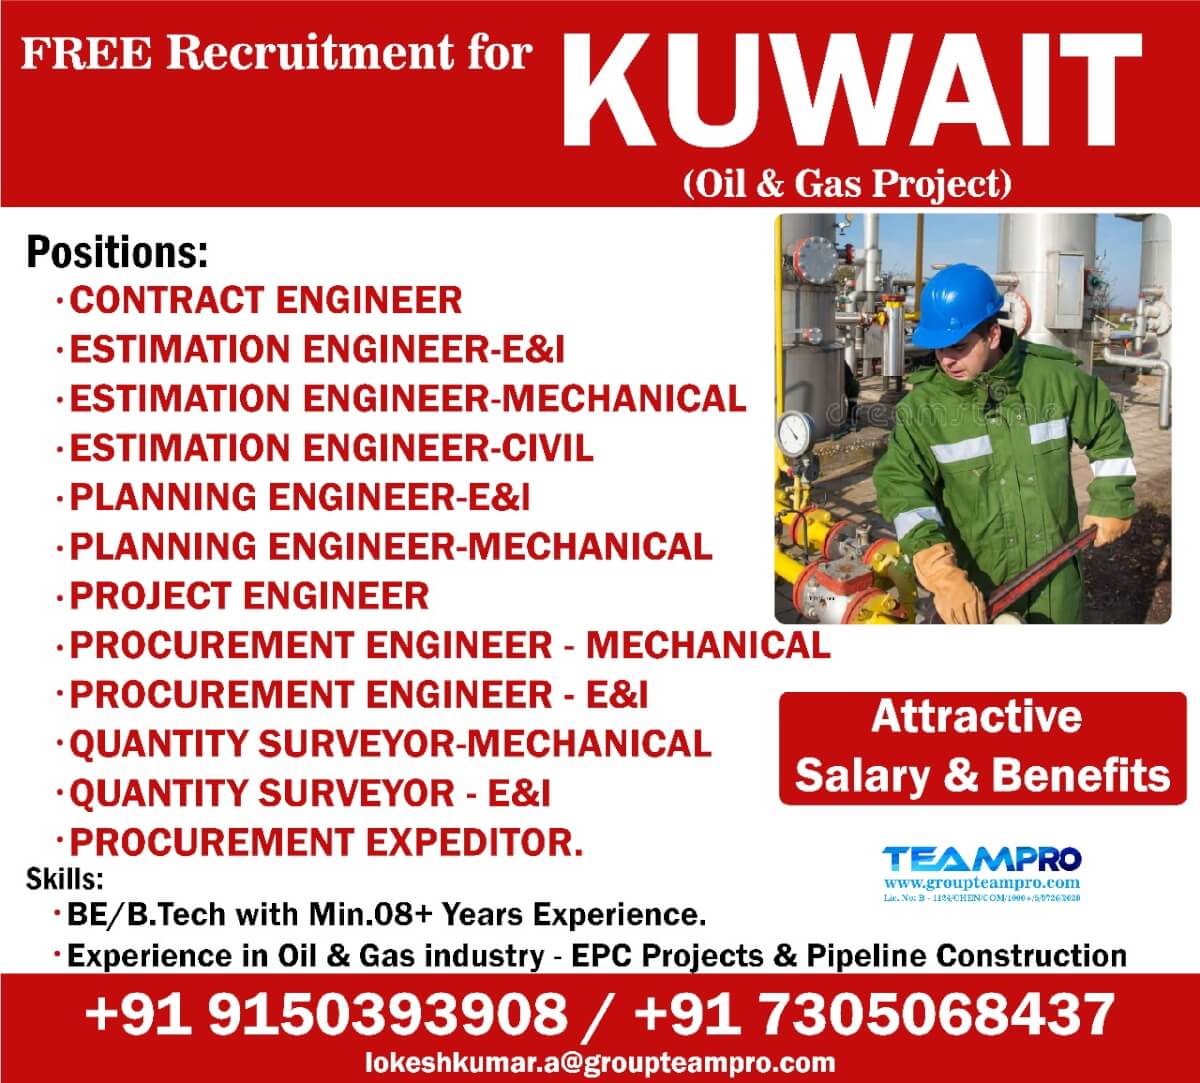 Free Recruitment For Kuwait -Planning Engineer-Mechanical